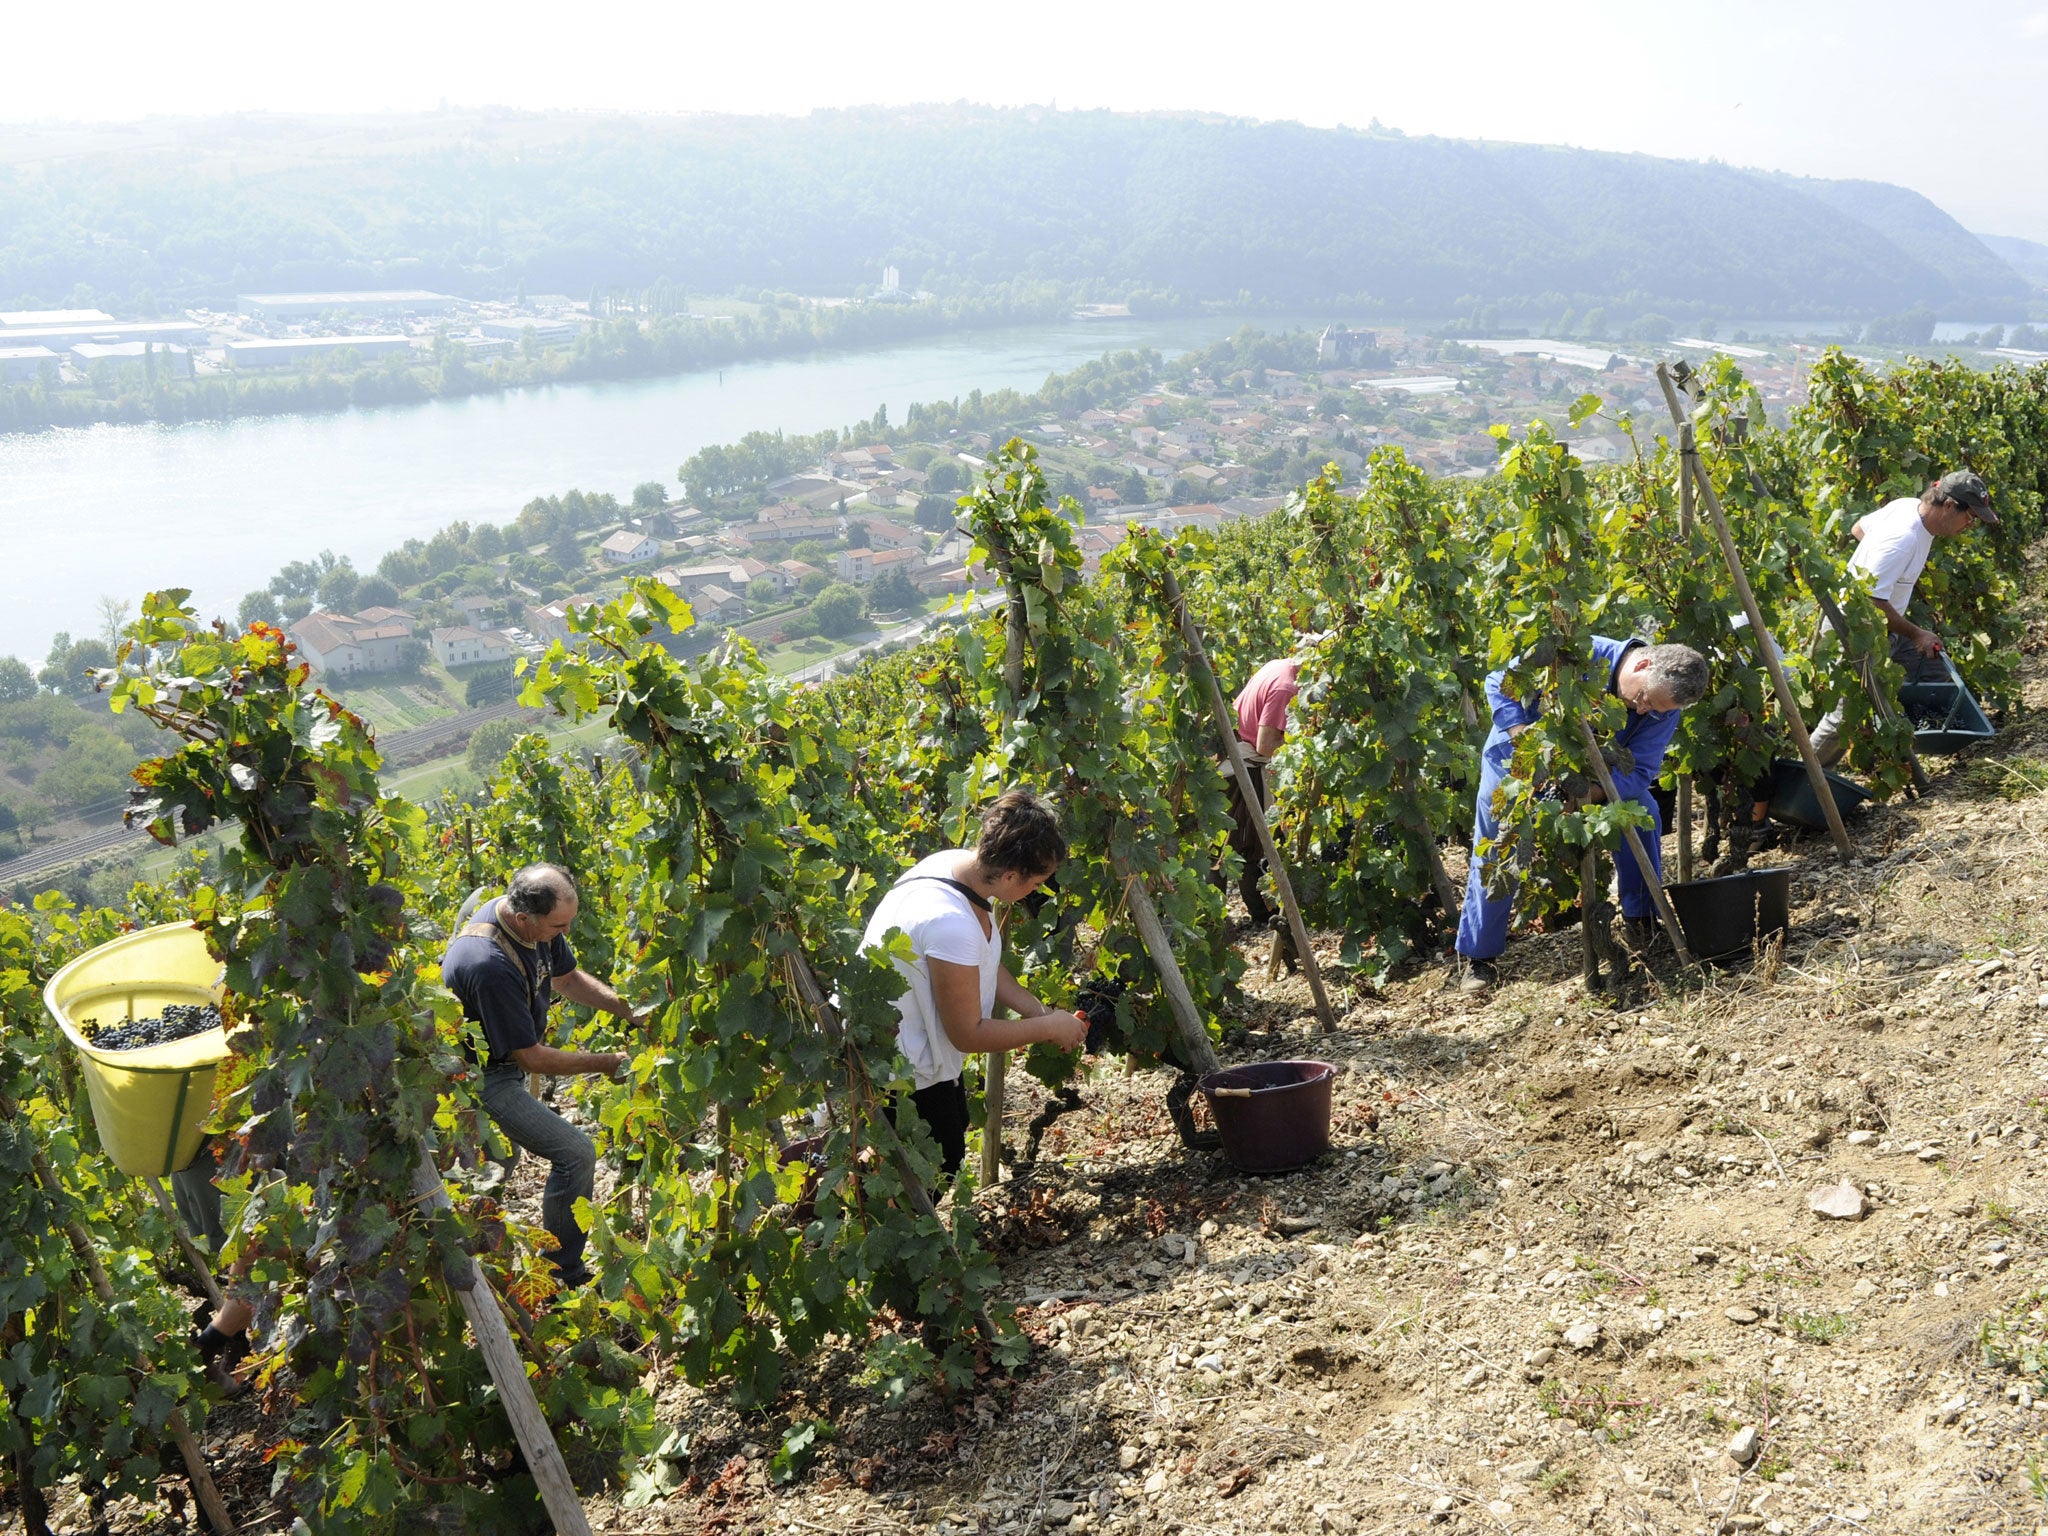 Grape pickers near the Rhone in France